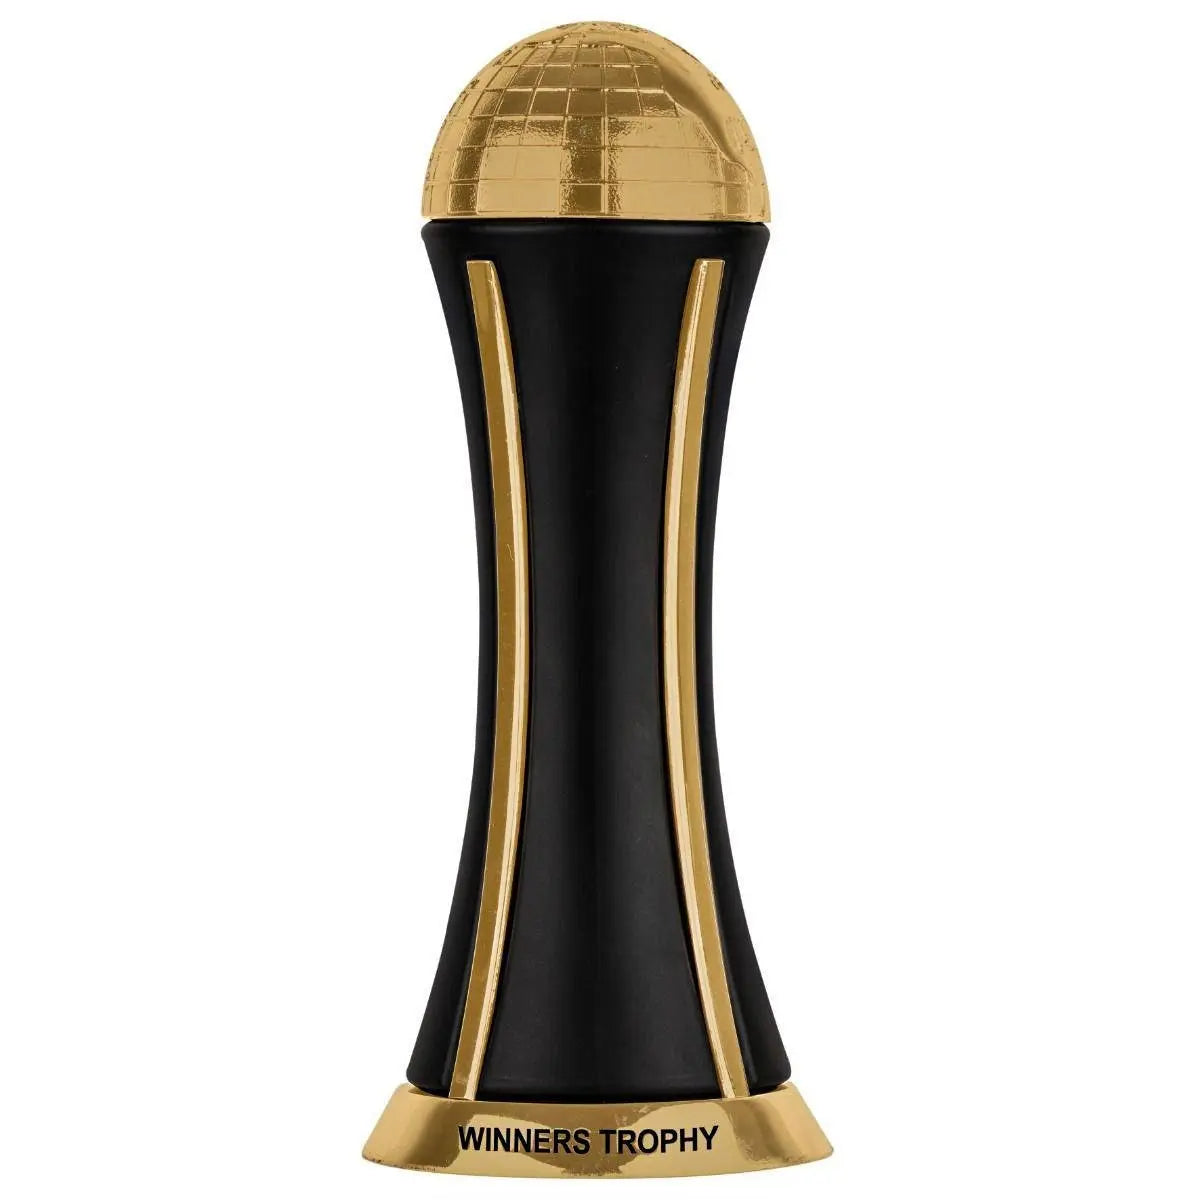 Winners Trophy Gold Perfume 100ml EDP Lattafa Pride